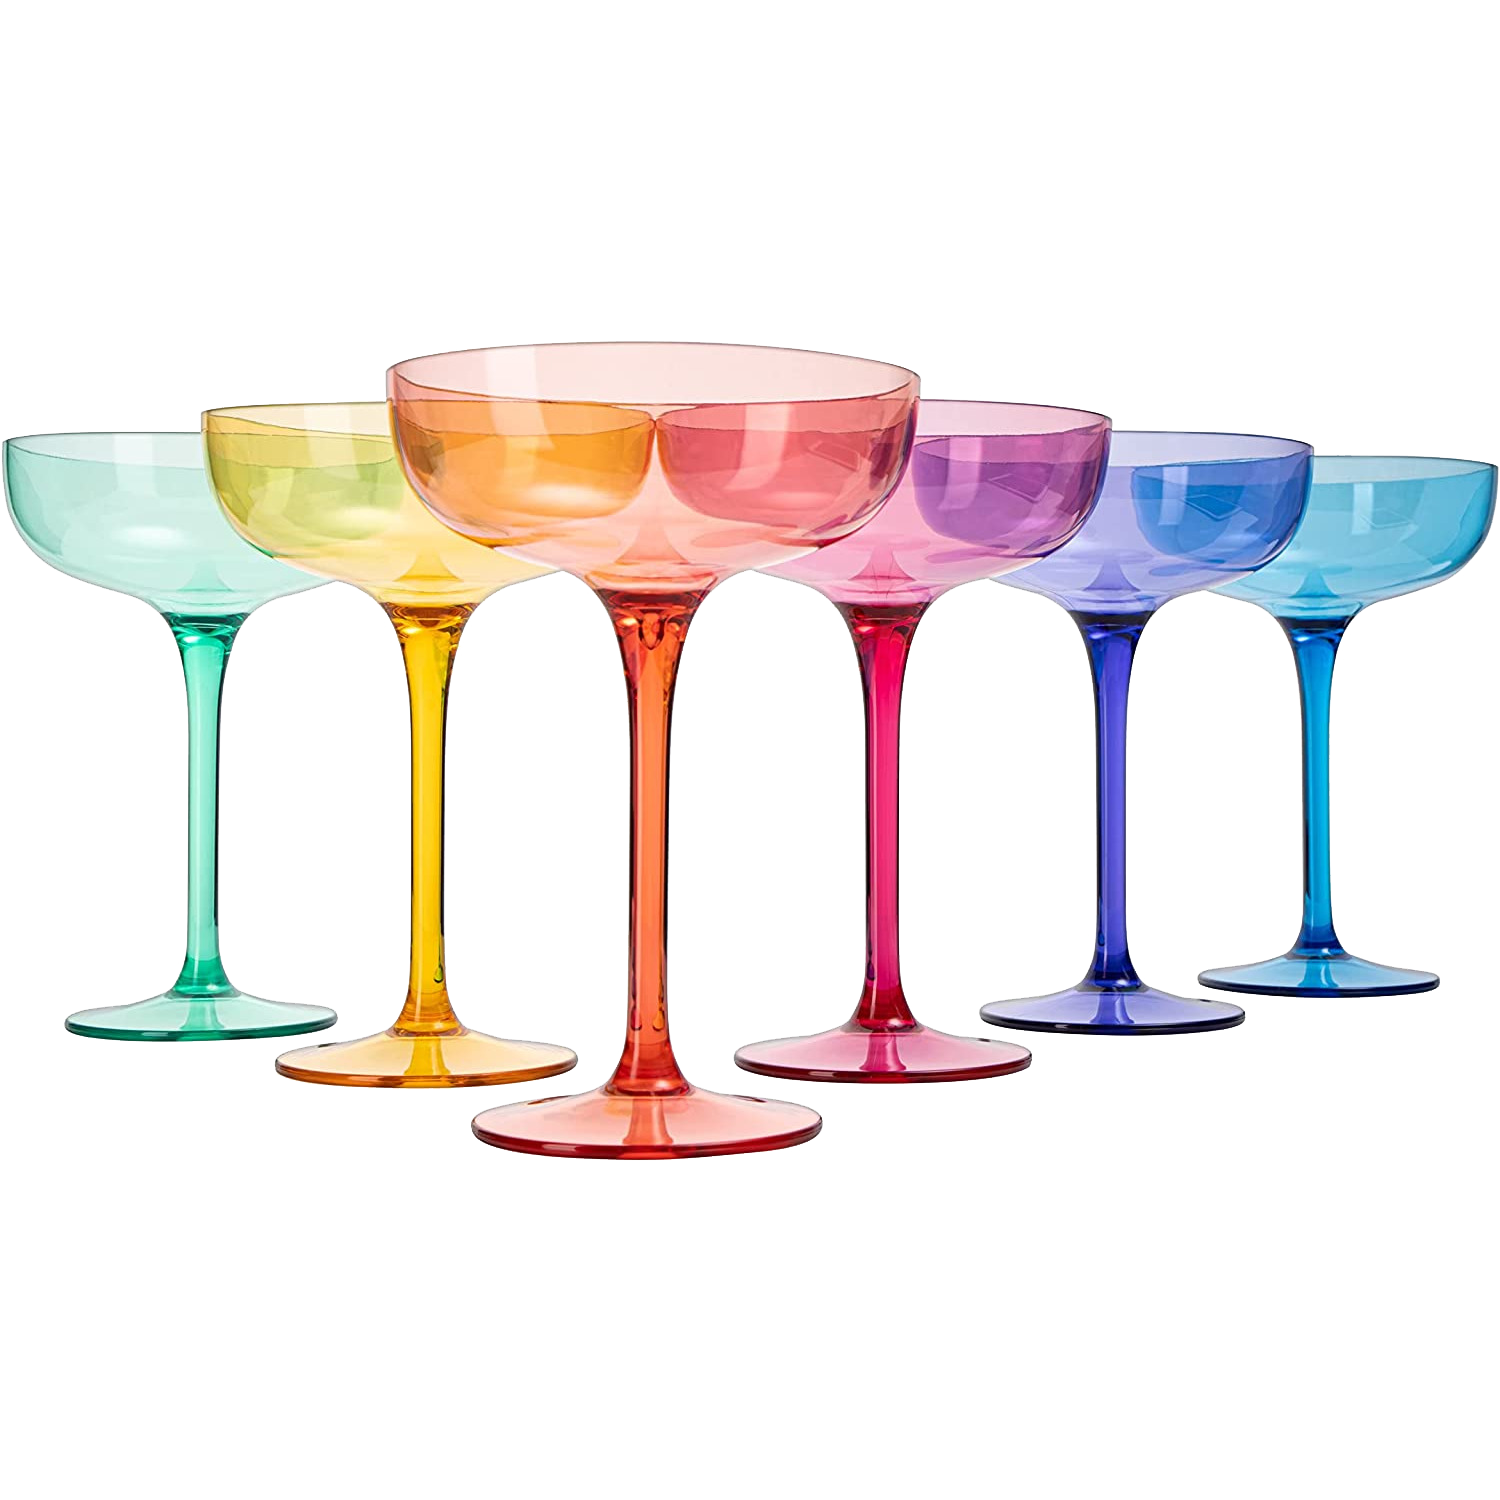 Large 14 oz Stemless Margarita Glasses + Colored